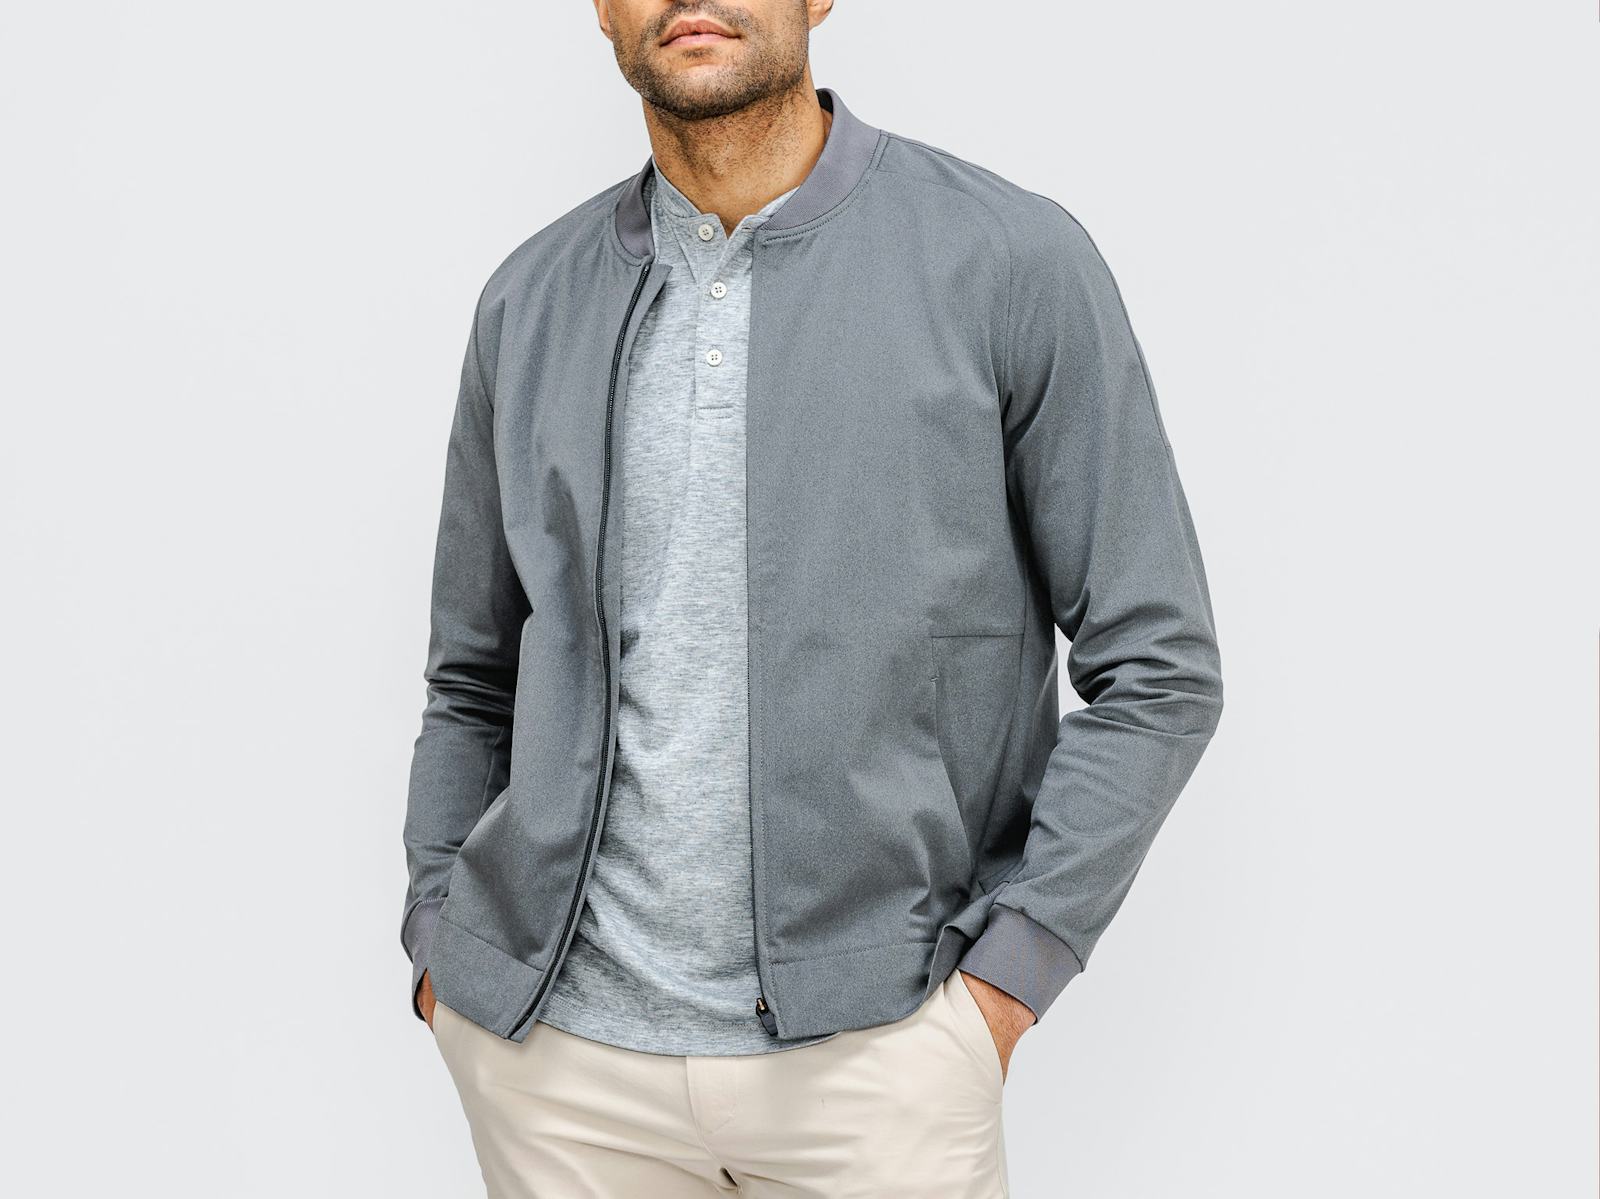 Men's Jackets & Coats: Chore Coats & Outerwear | Ministry of Supply